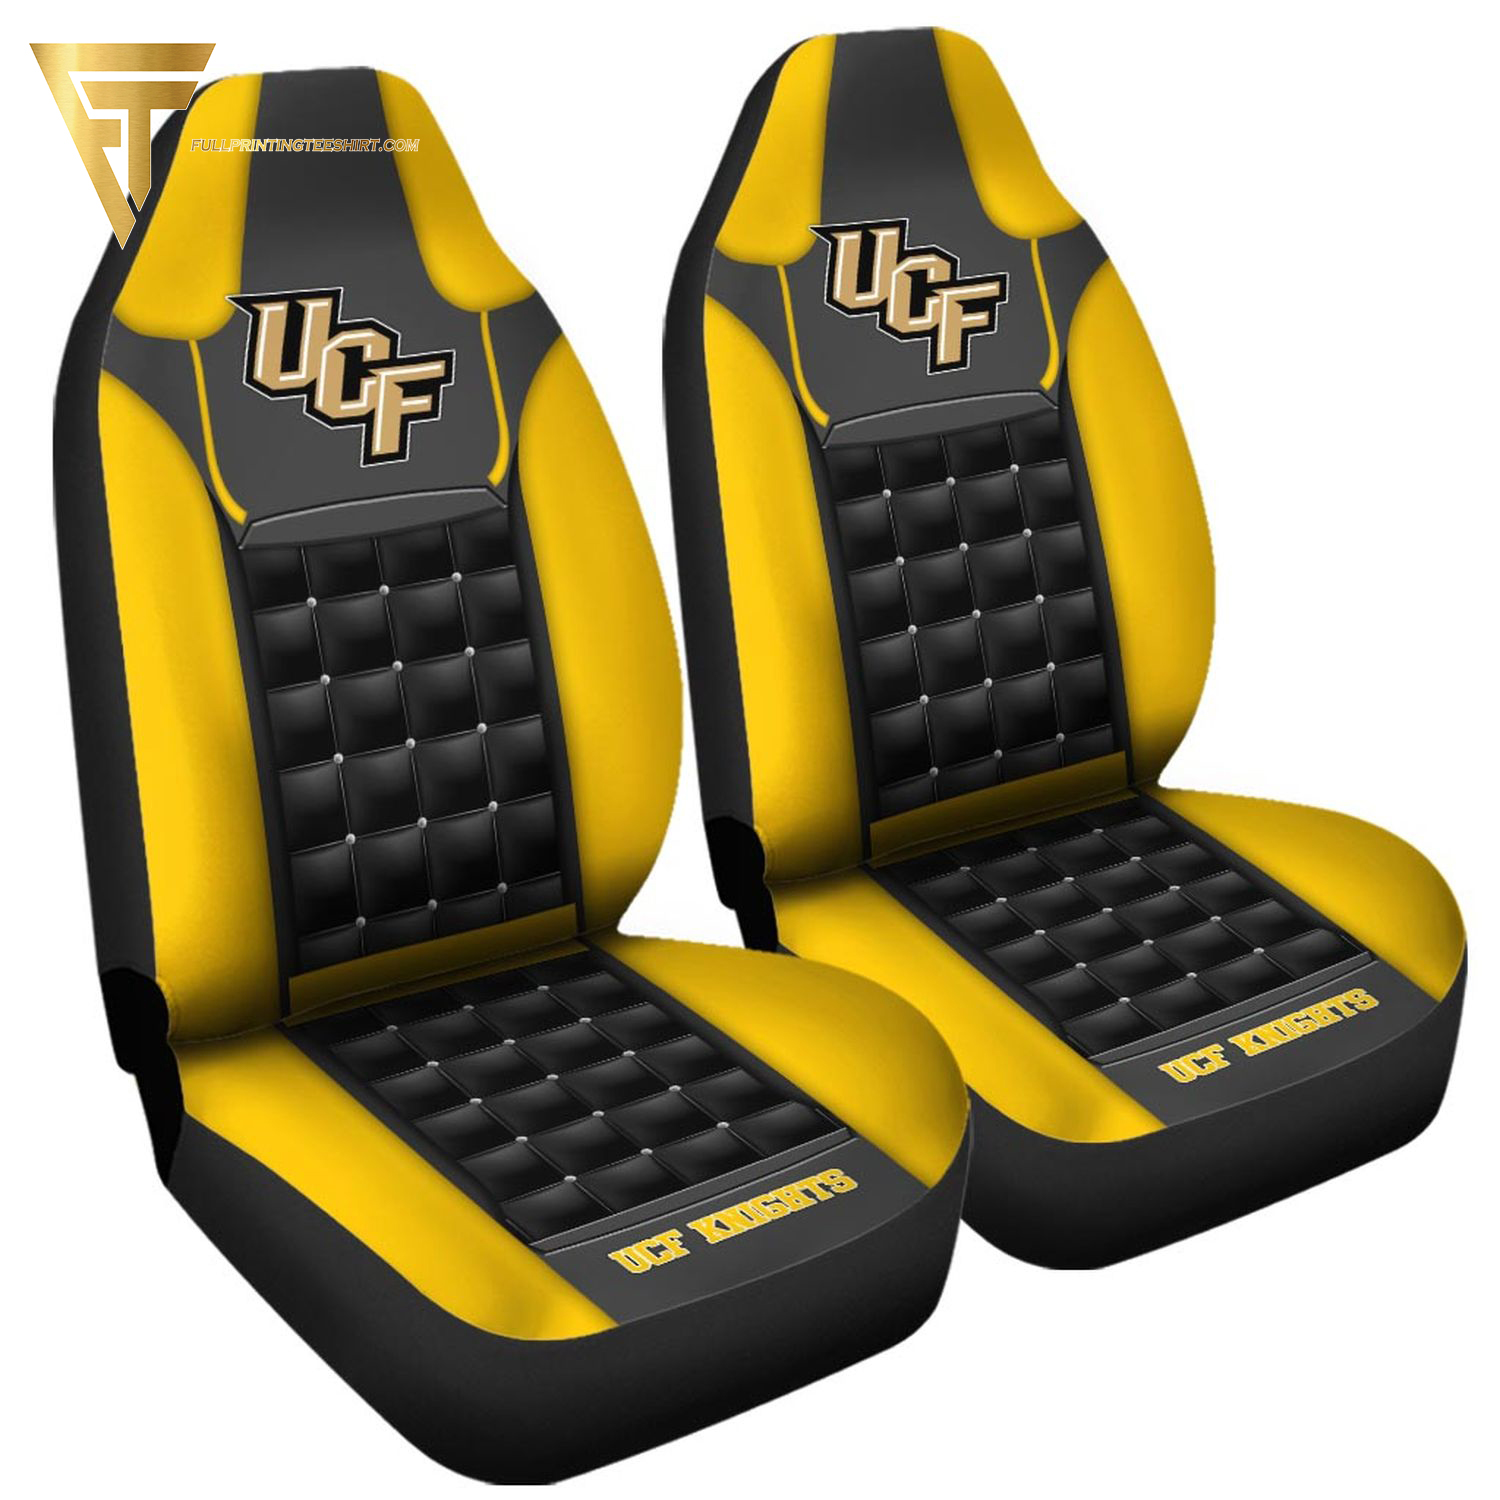 UCF Knights Sport Team Car Seat